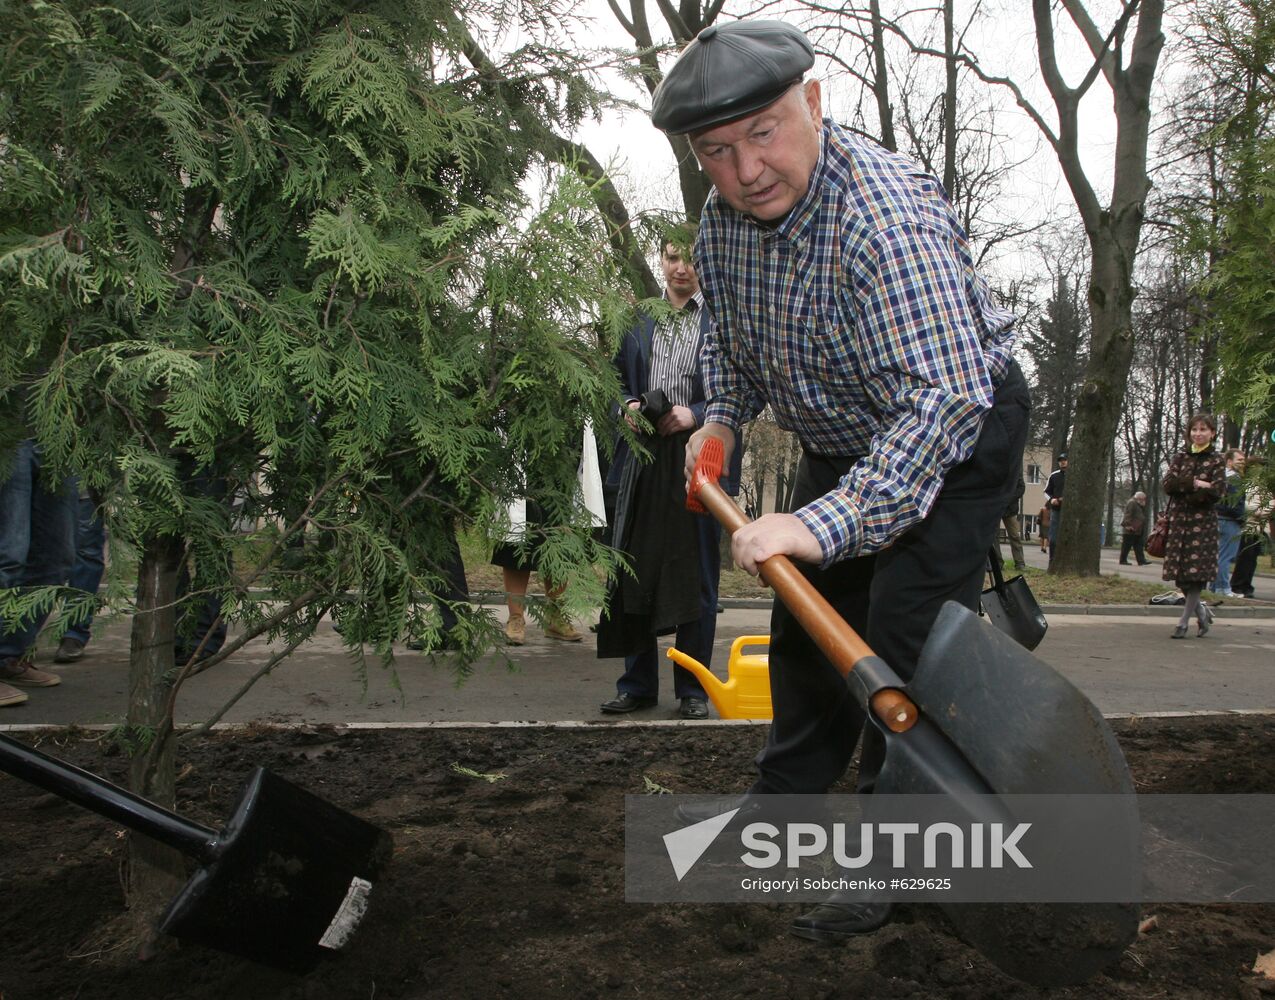 Yury Luzhkov plants trees on volunteer city clean-up day